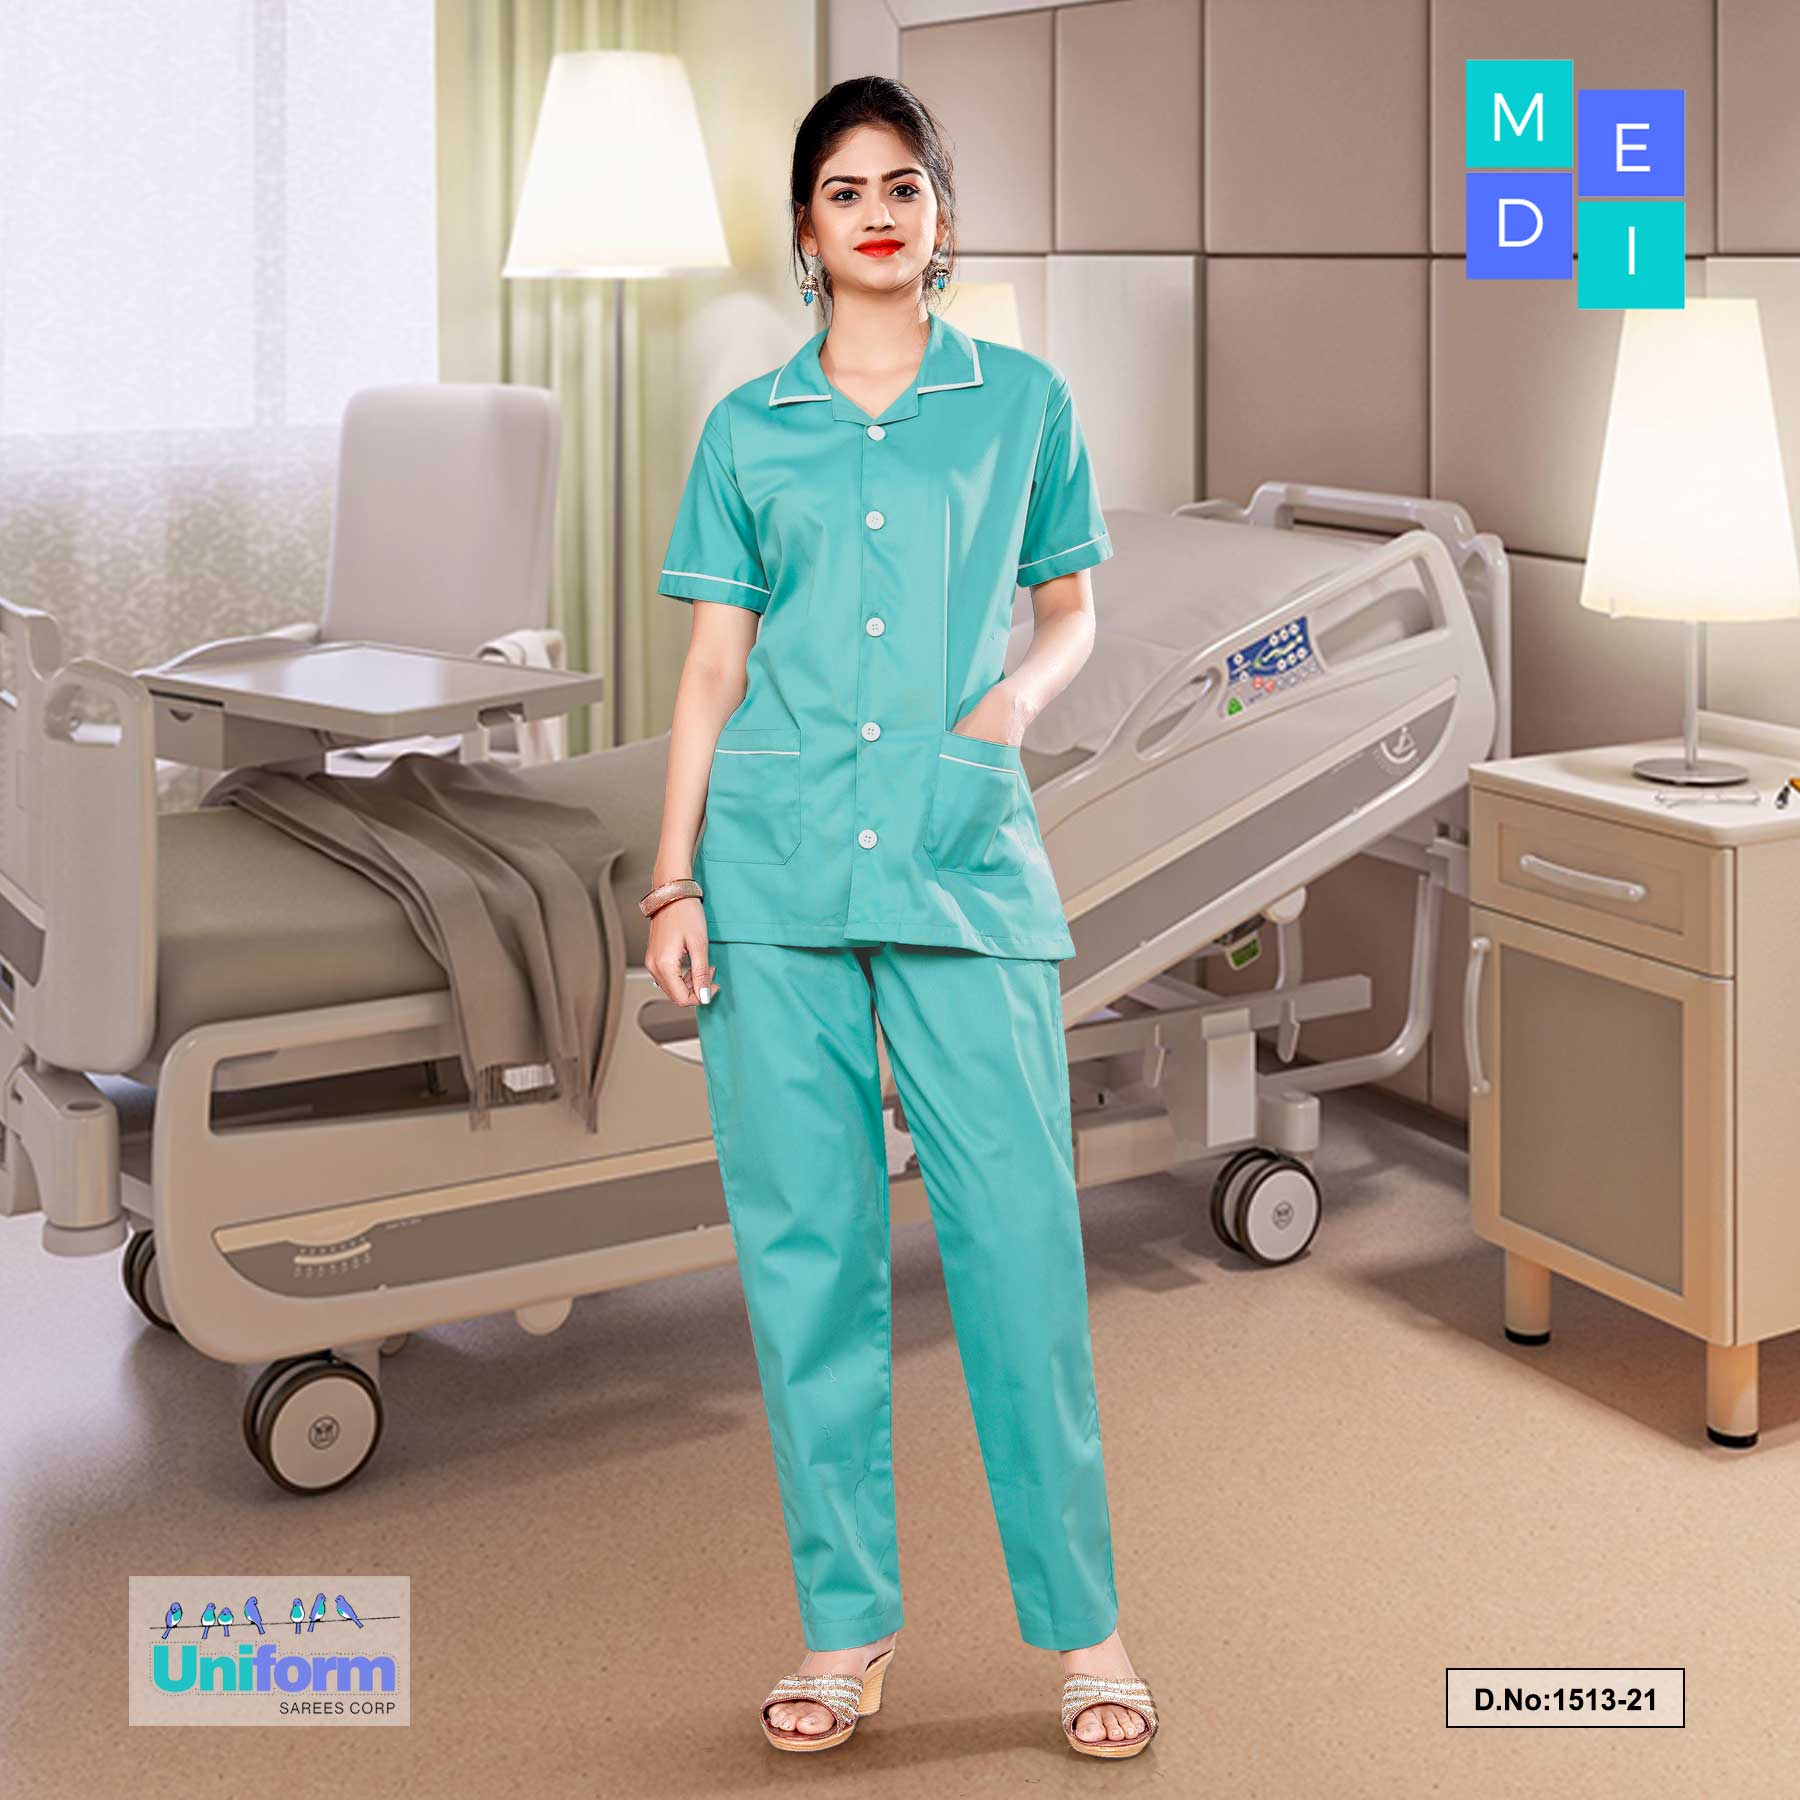 Women's Nurse Wear, Hospital Uniform For Nurses, Clinic Uniforms